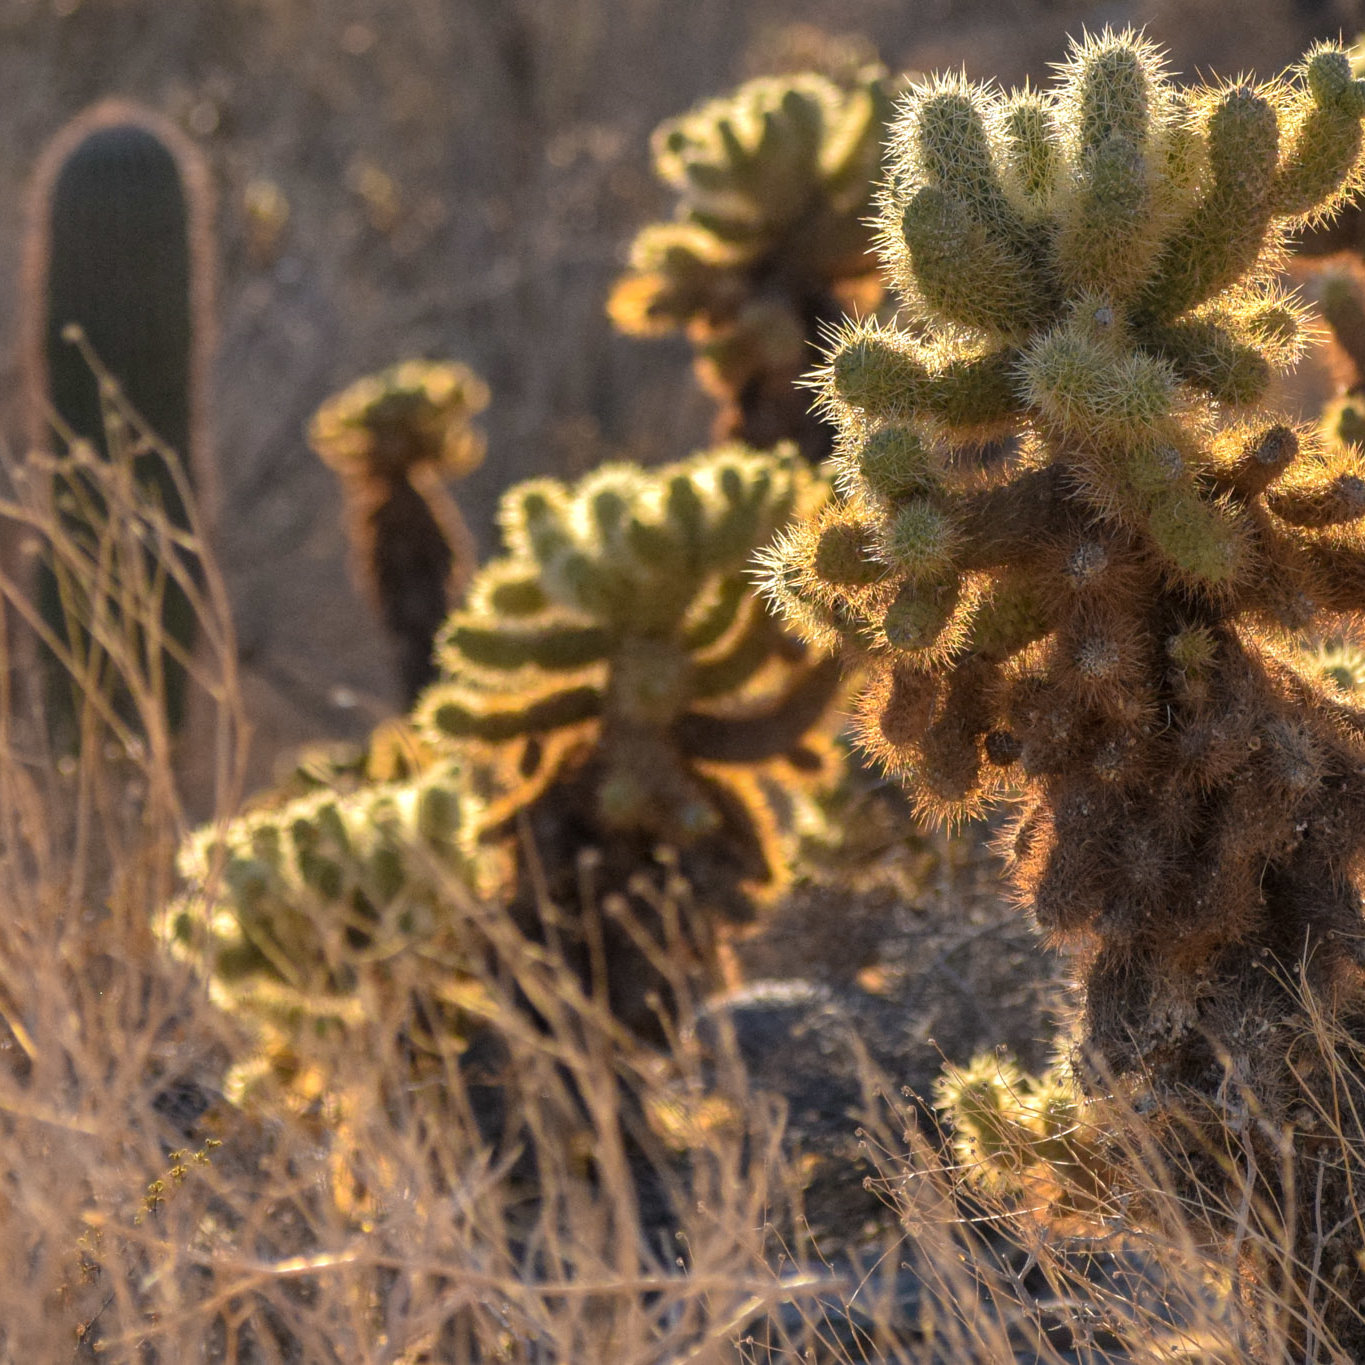 Cactus, Arizona